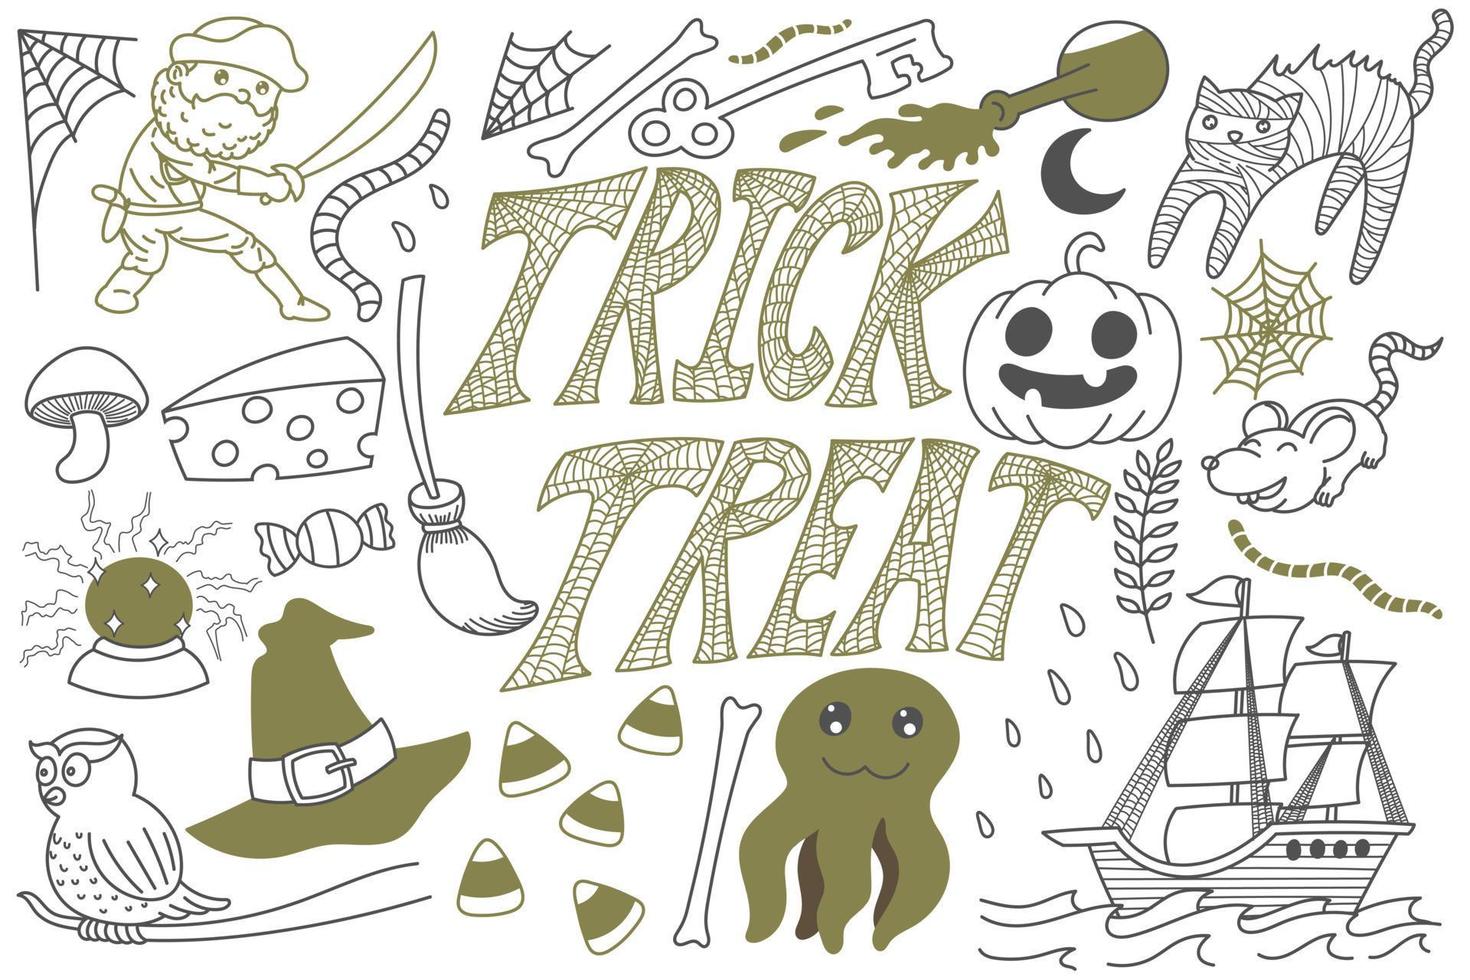 trick or treat halloween doodles art vektor